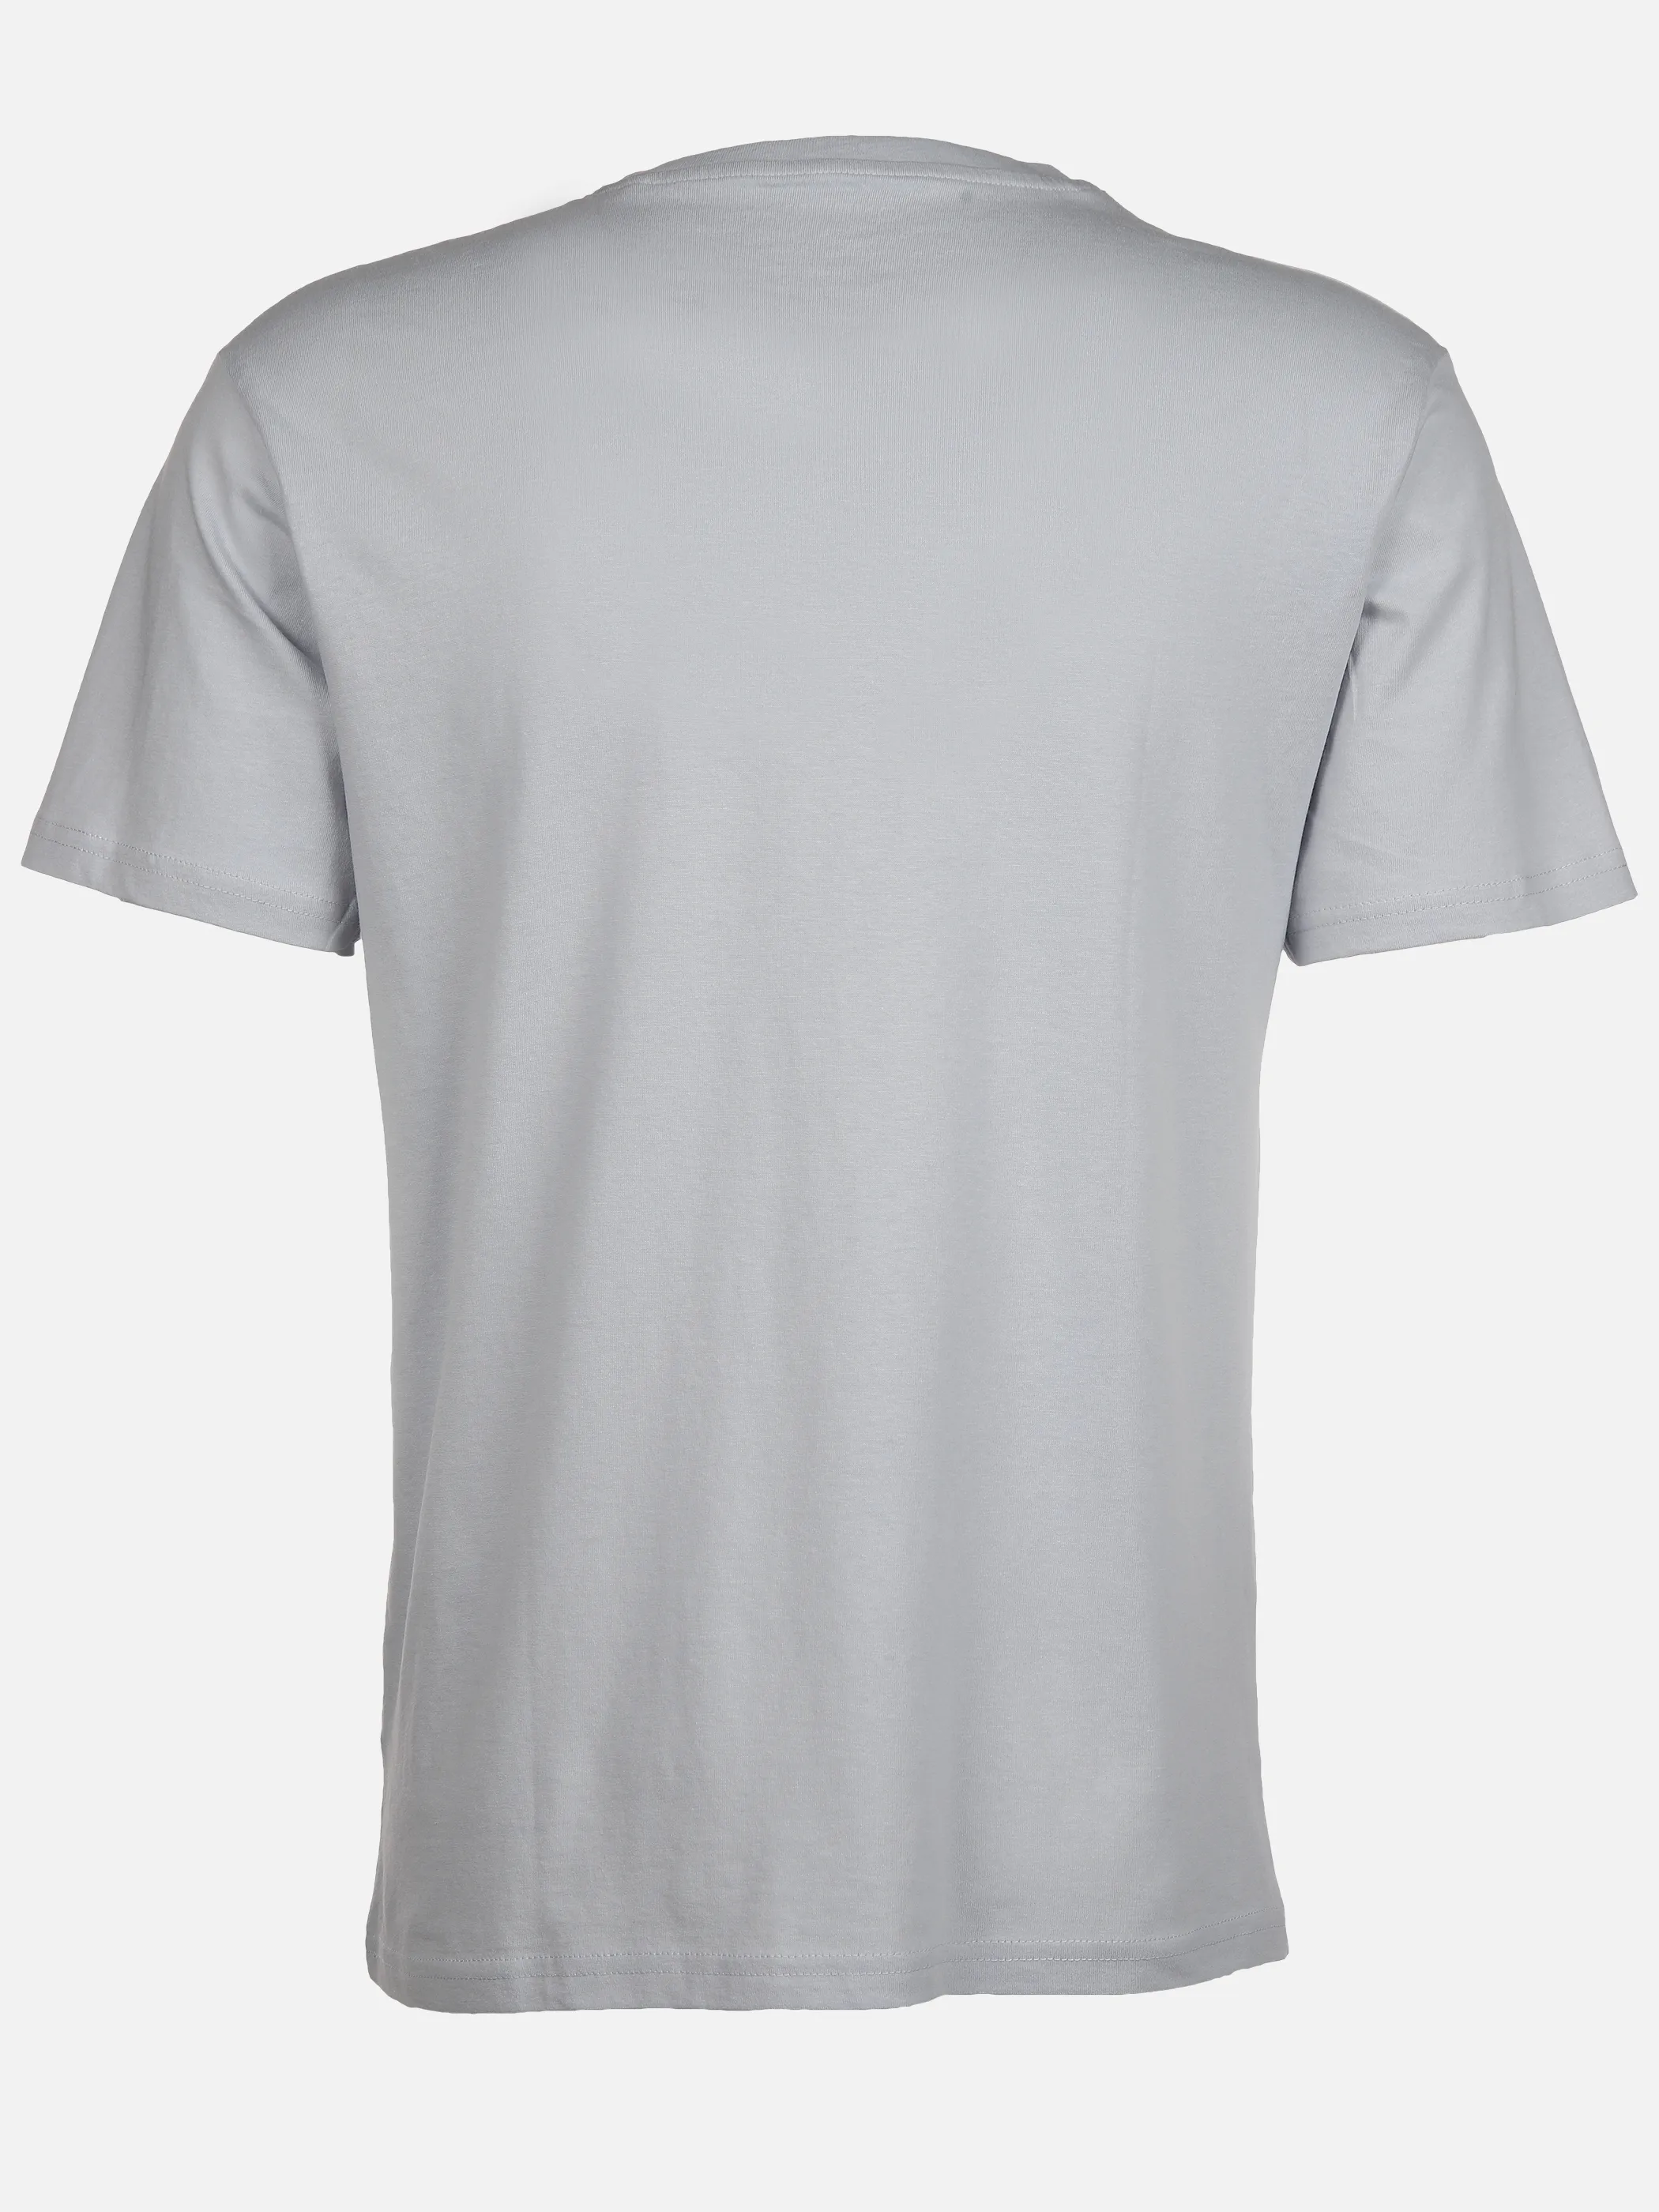 One Way YF-He T-Shirt Basic Silber 890068 14-4106TCX 2